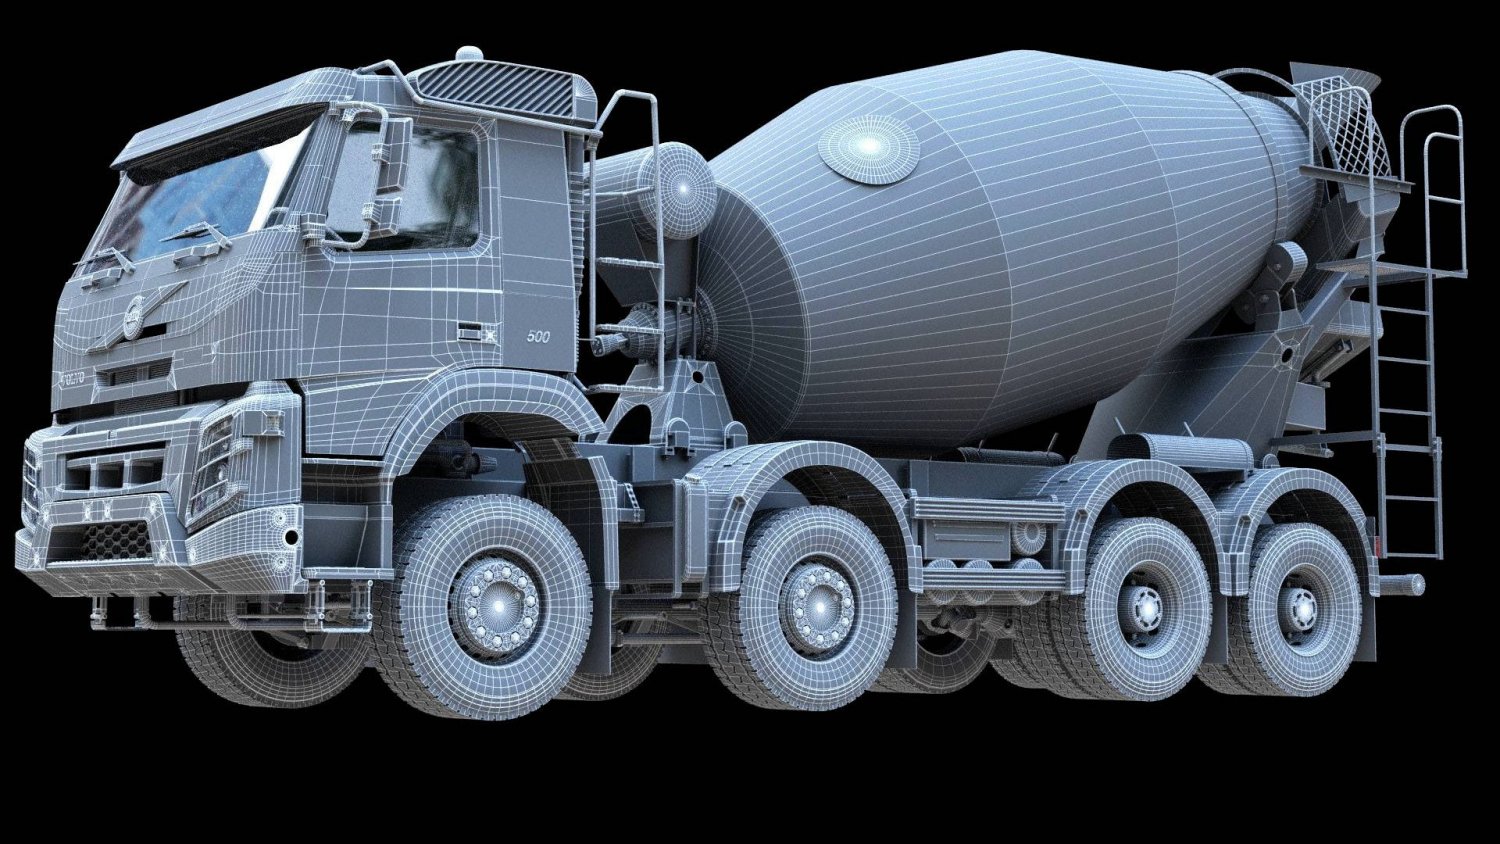 Volvo FMX truck Concrete Mixer - customized 3D model